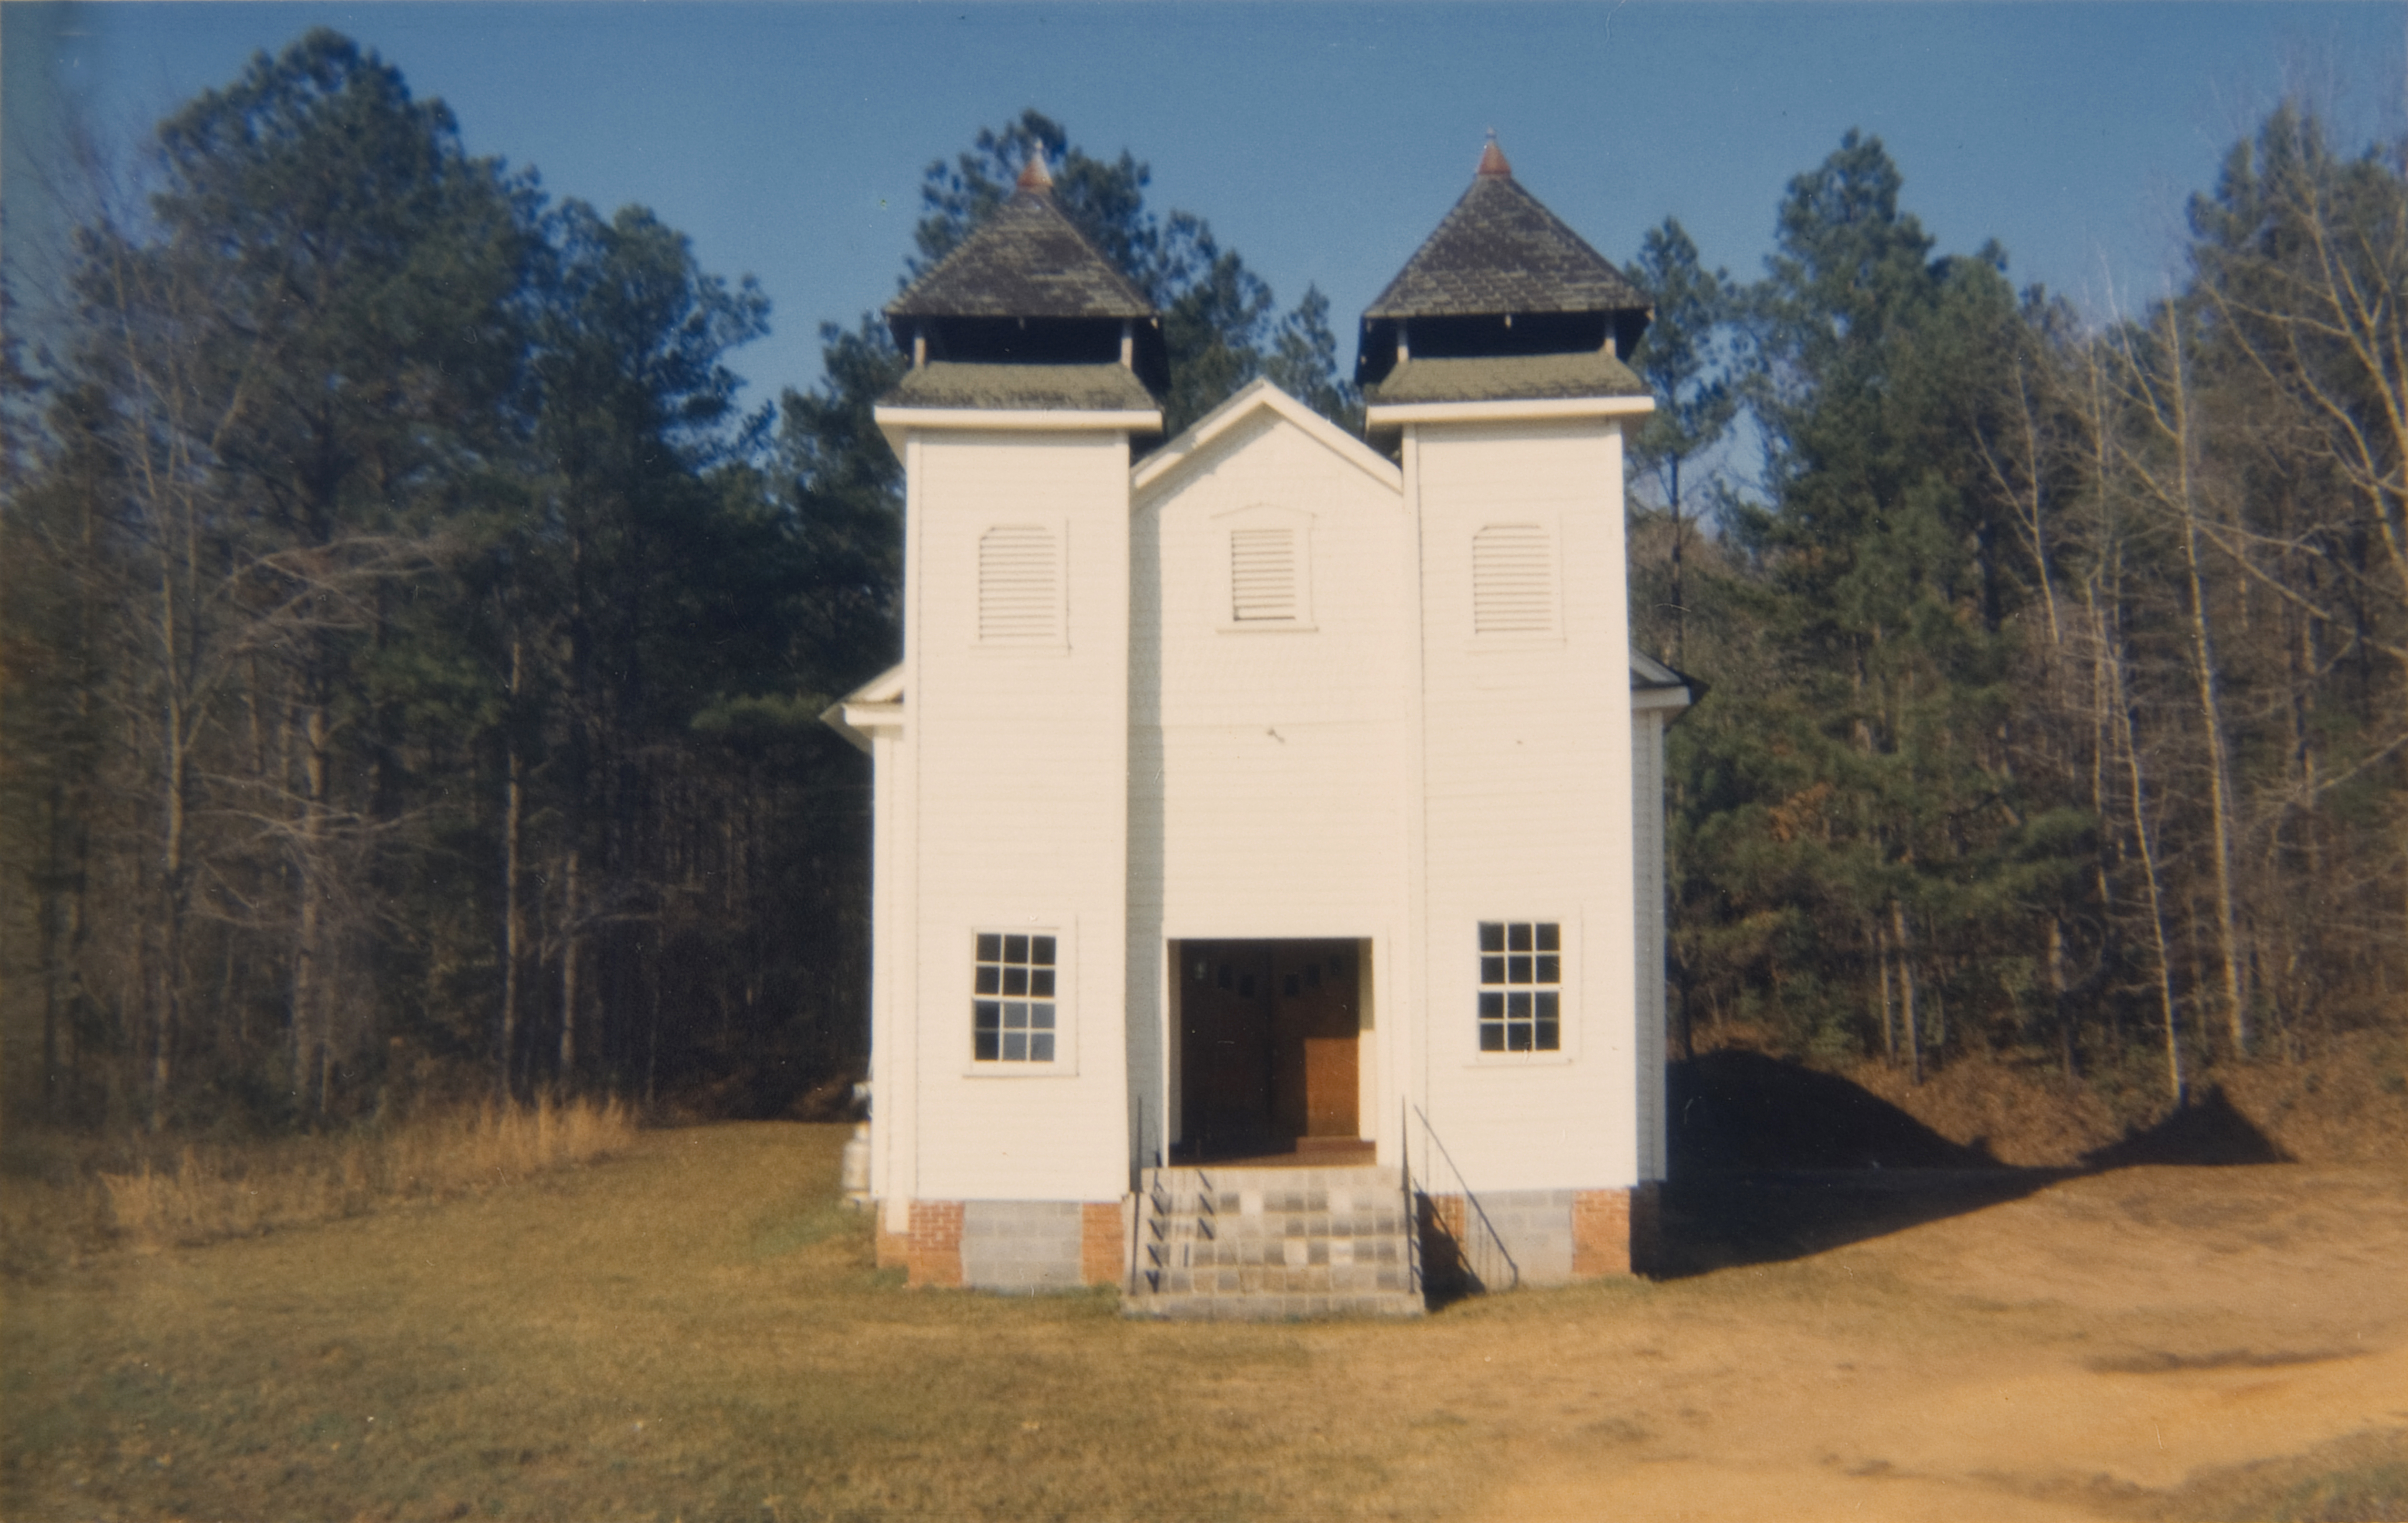 Church, Sprott, Alabama